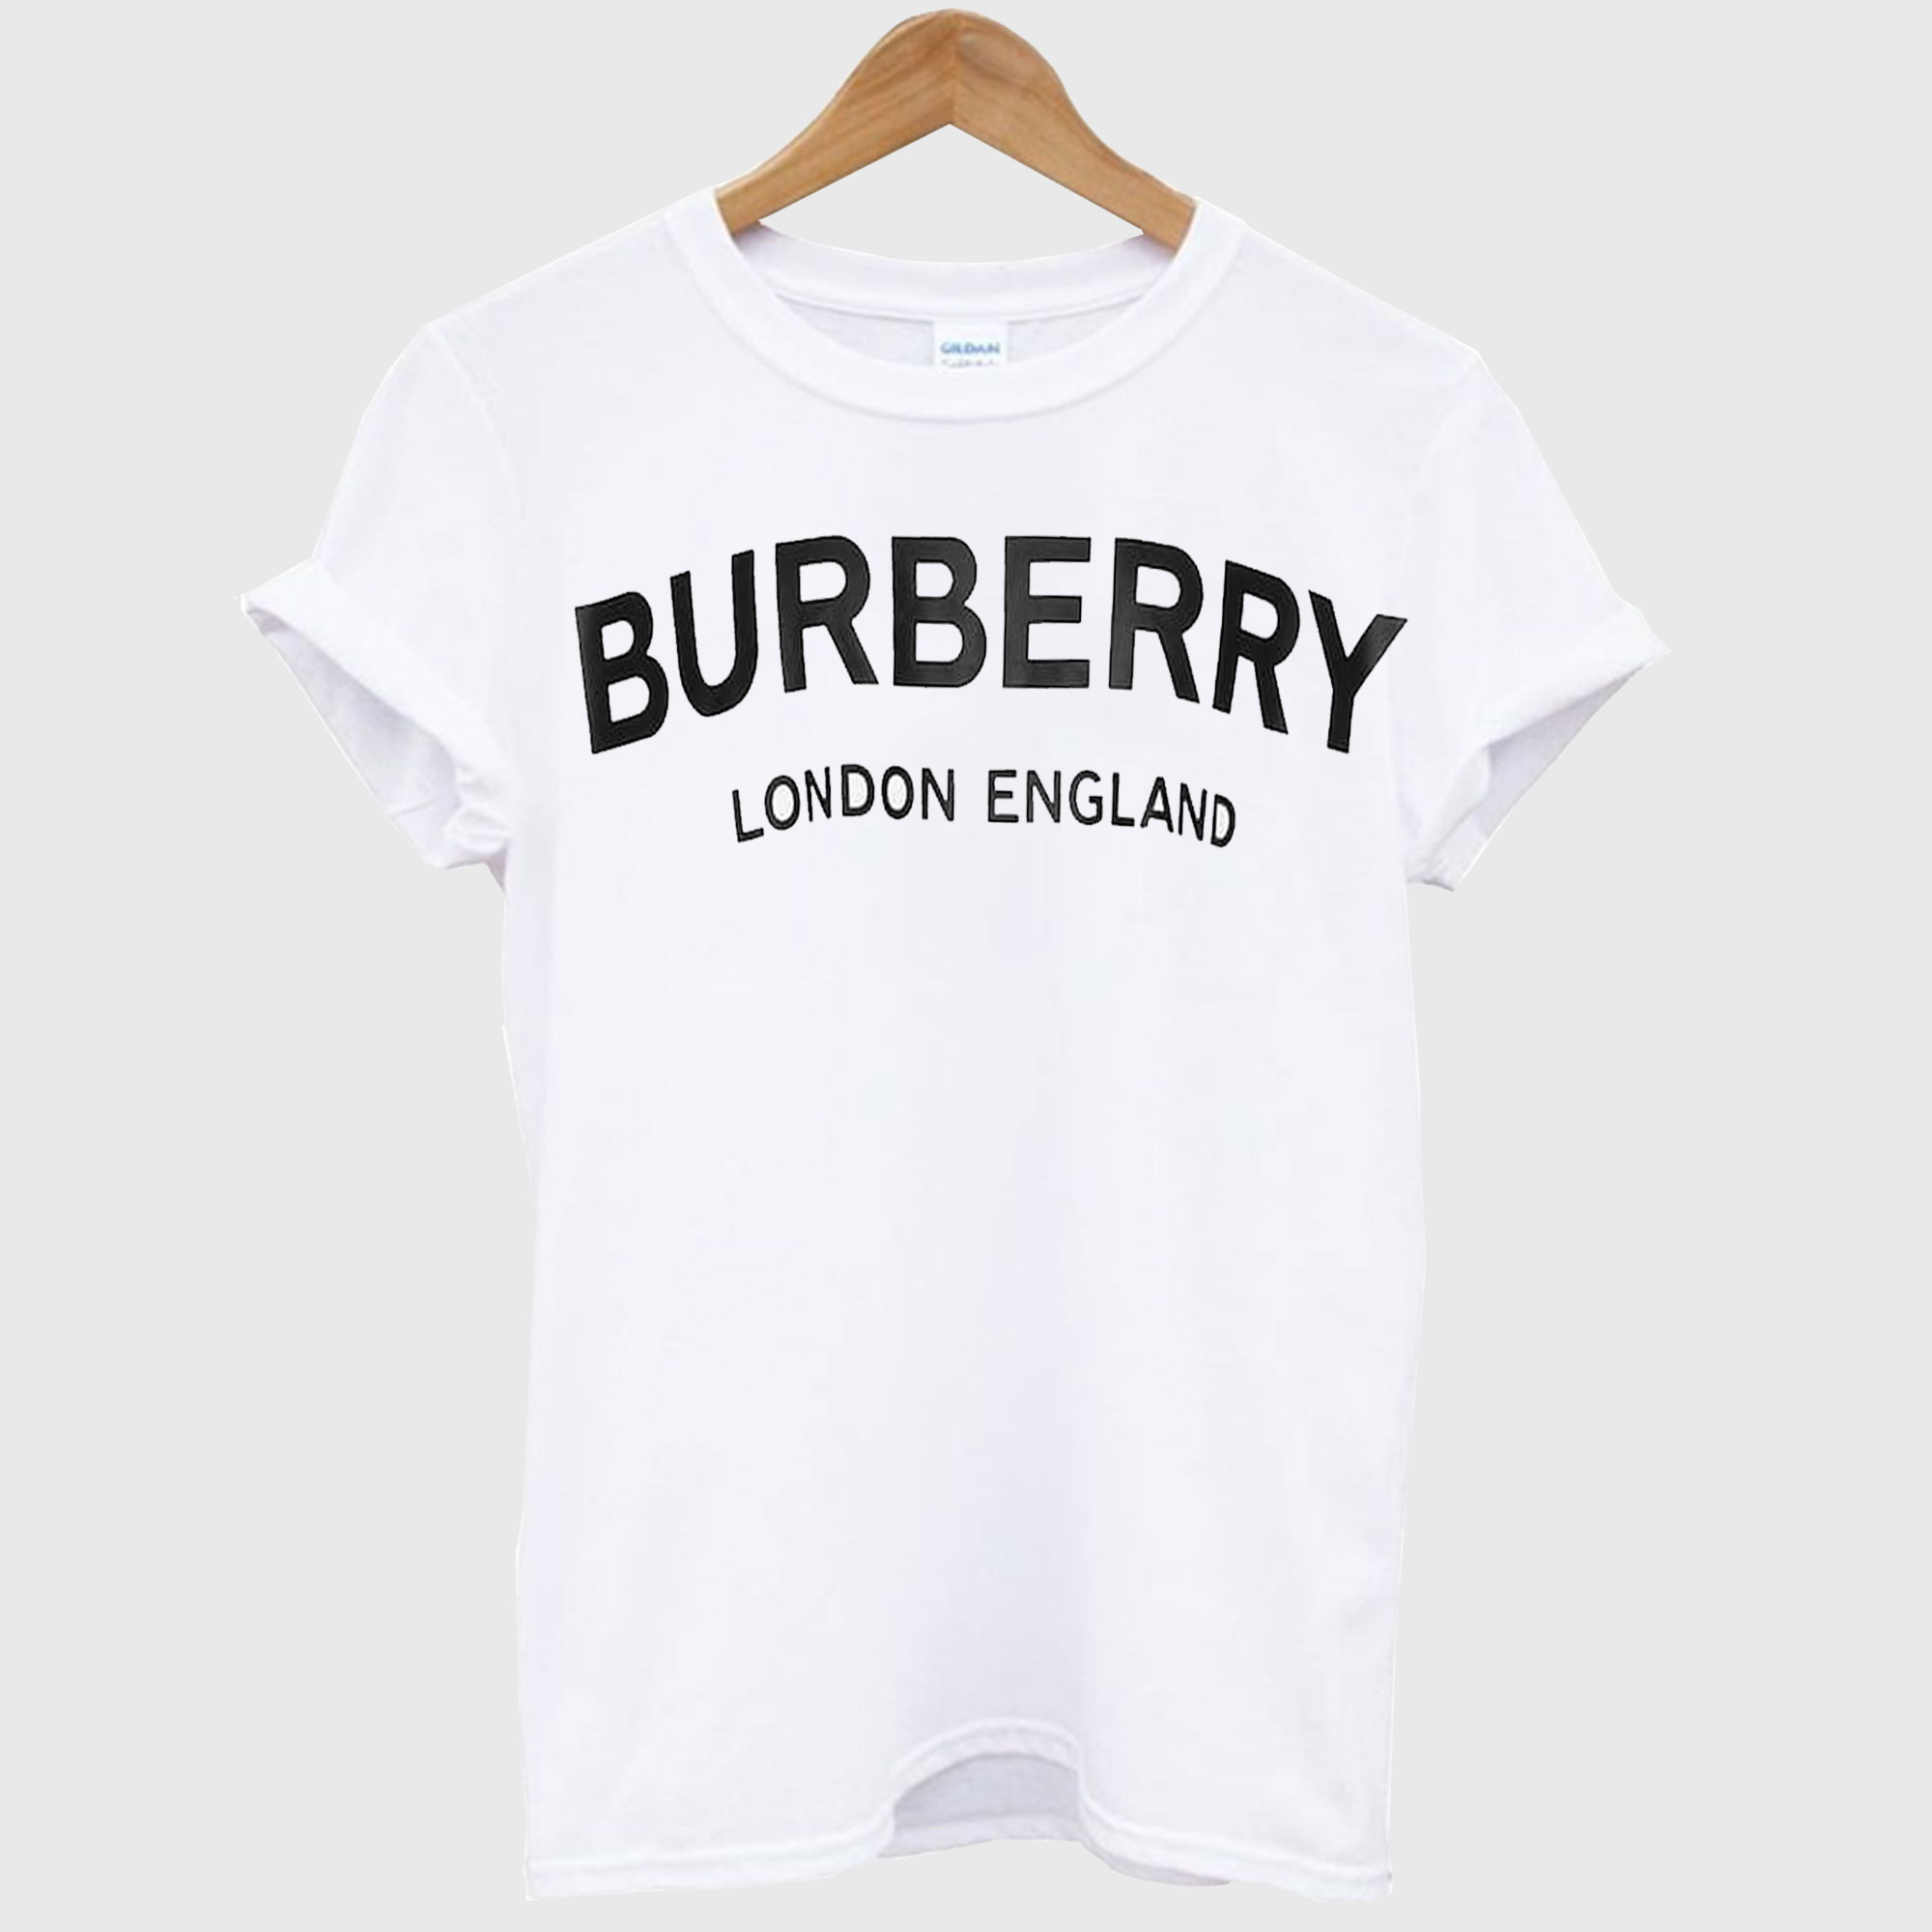 burberry london england